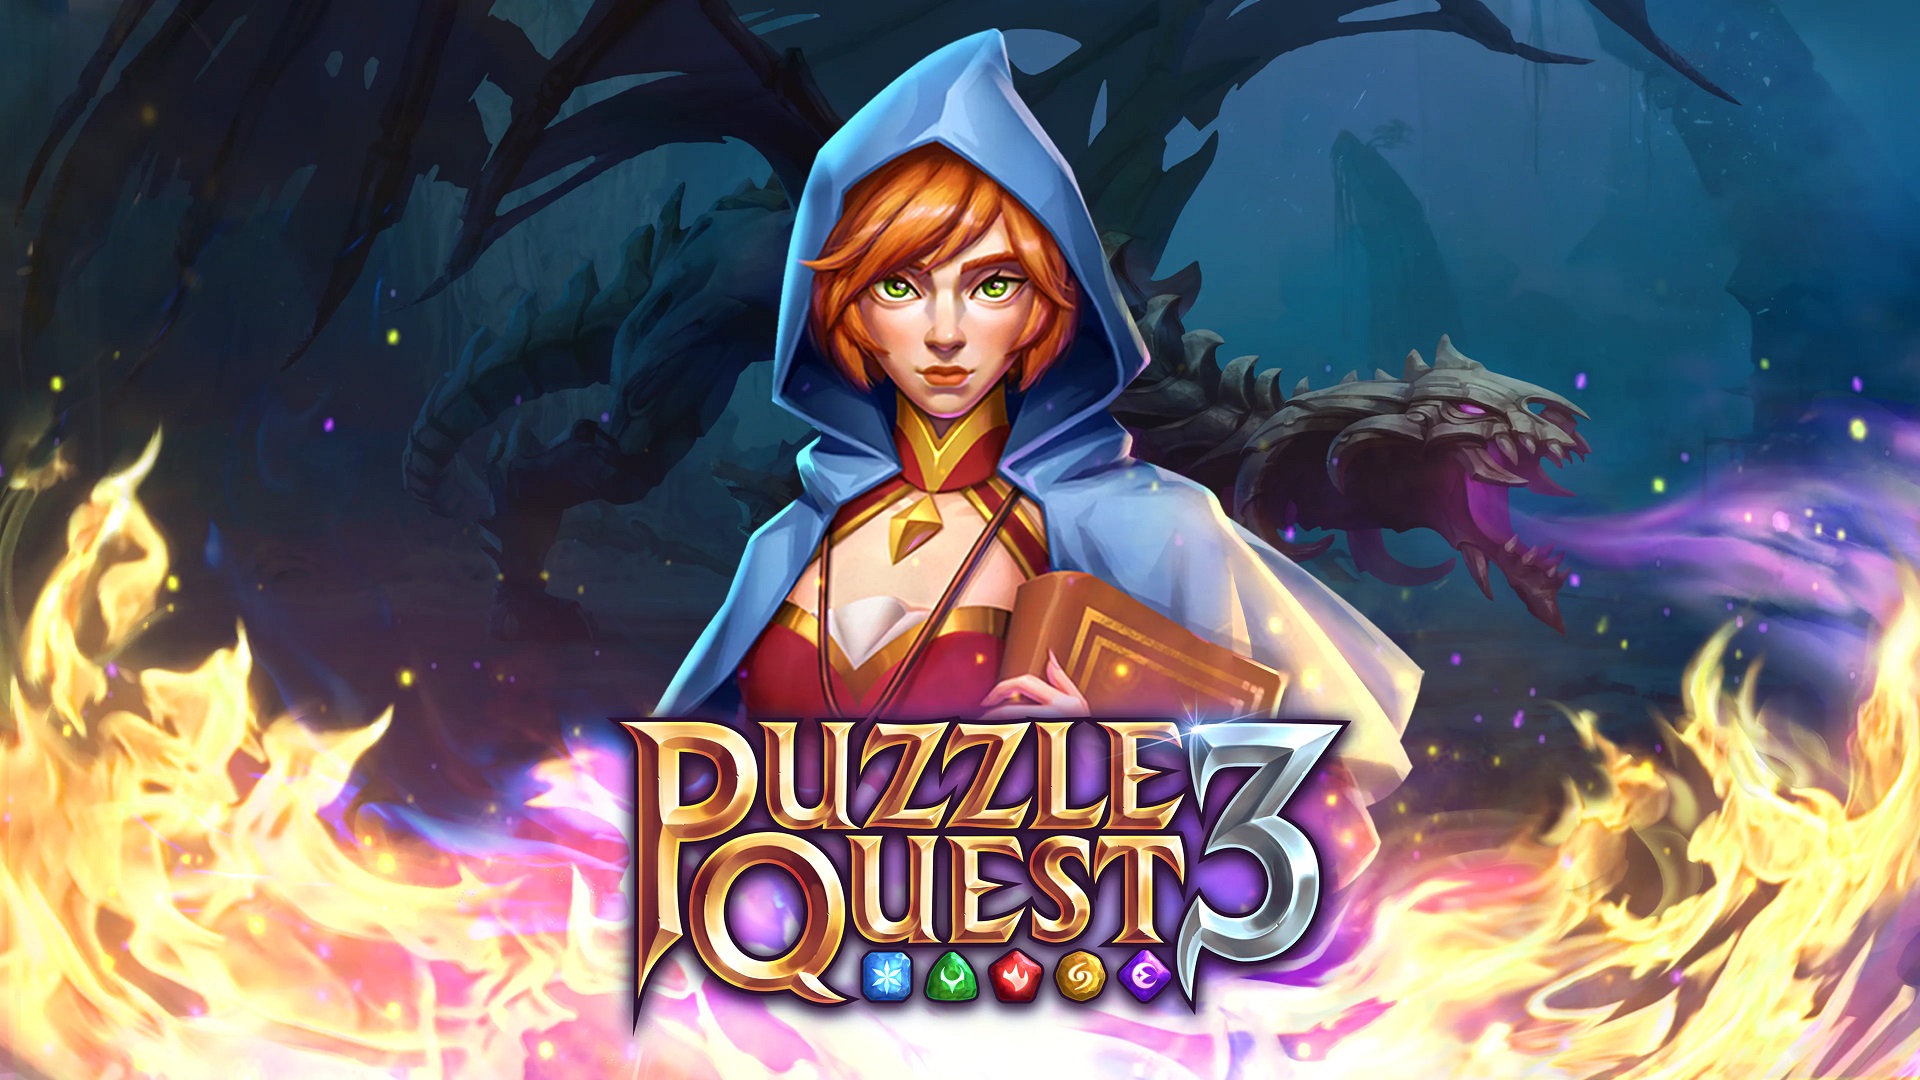 Puzzle Quest 3 release date